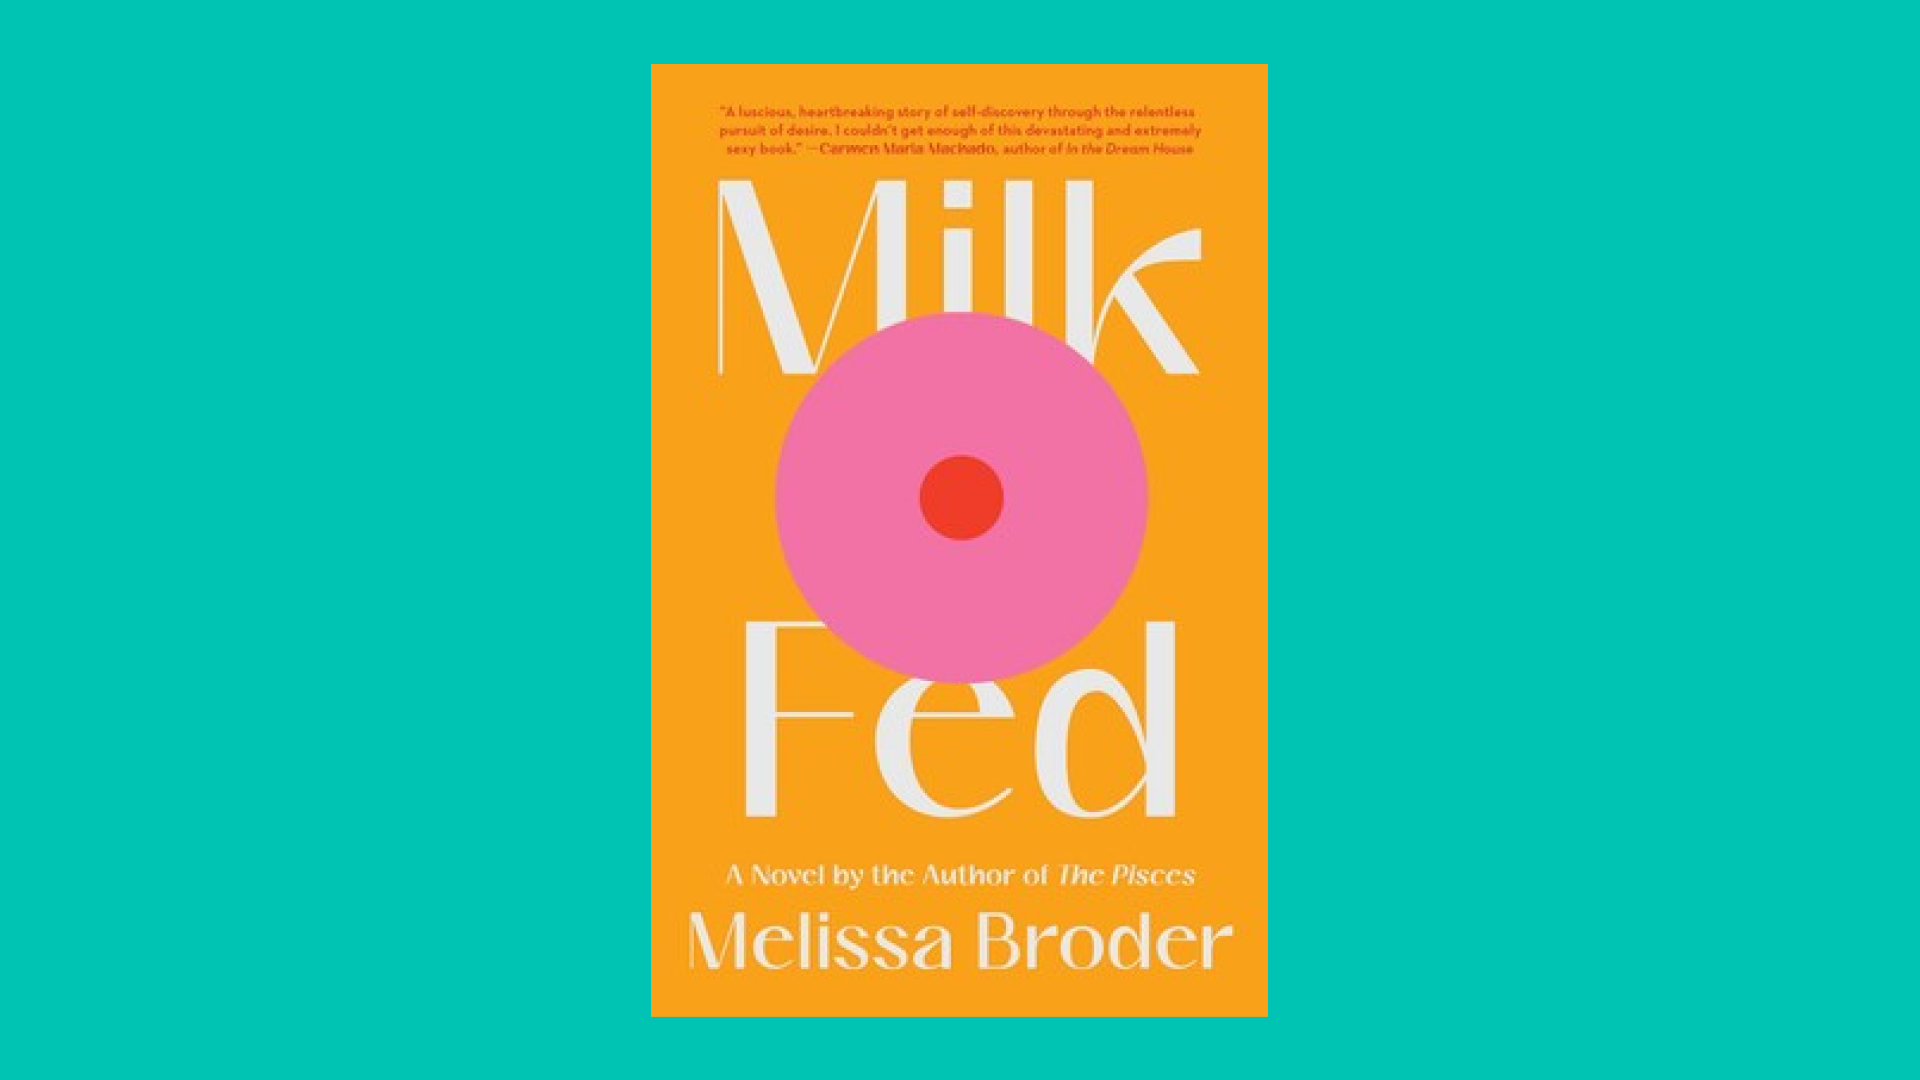 “Milk Fed” by Melissa Broder